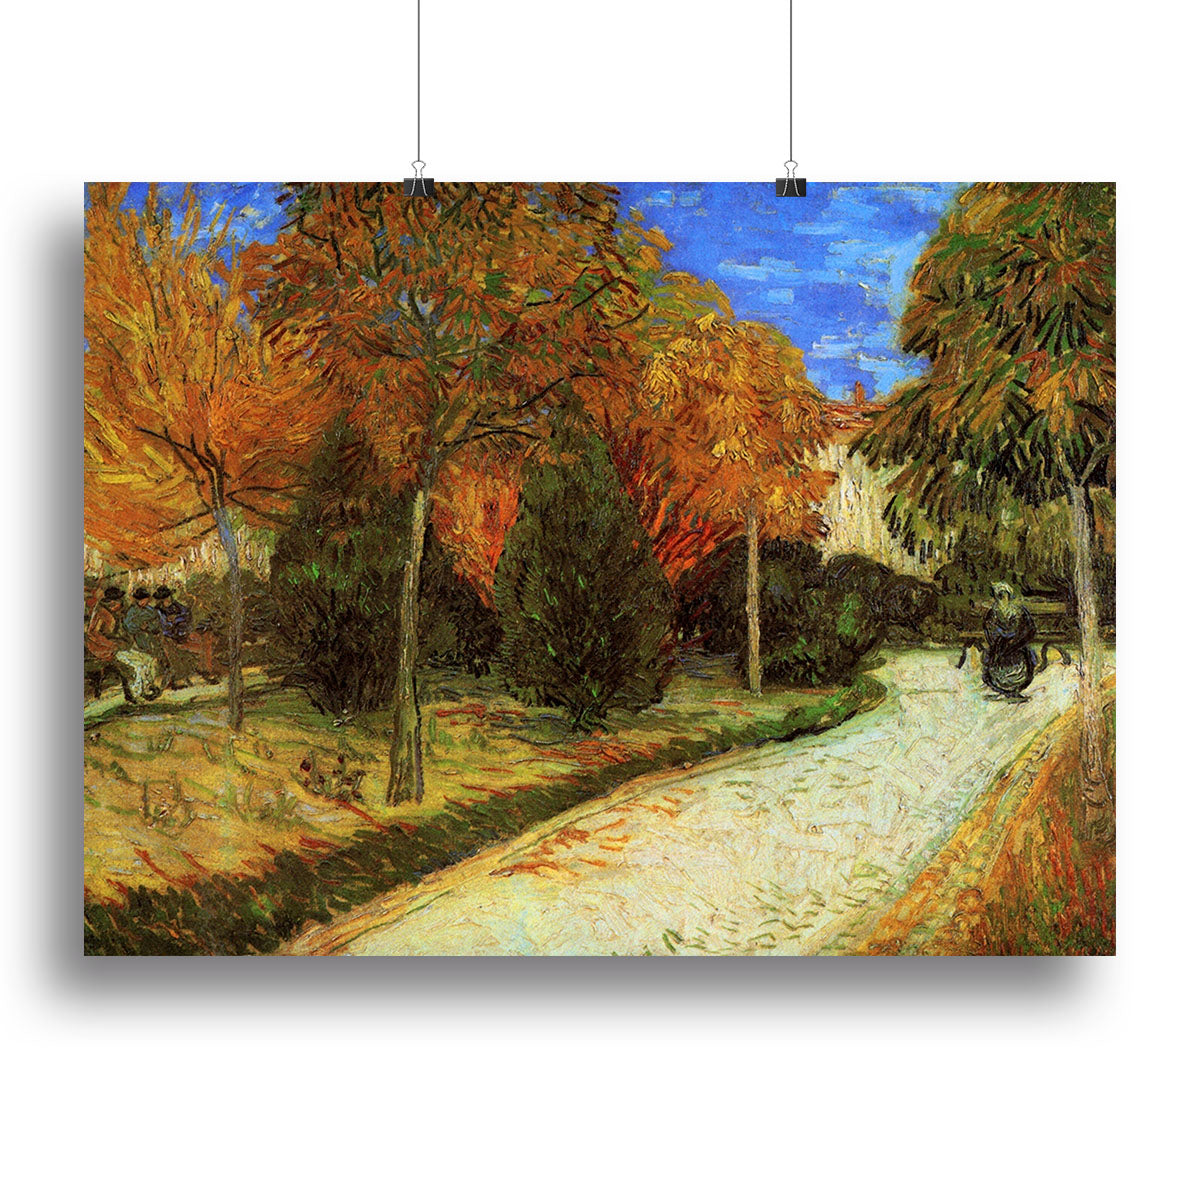 The Public Park at Arles by Van Gogh Canvas Print or Poster - Canvas Art Rocks - 2